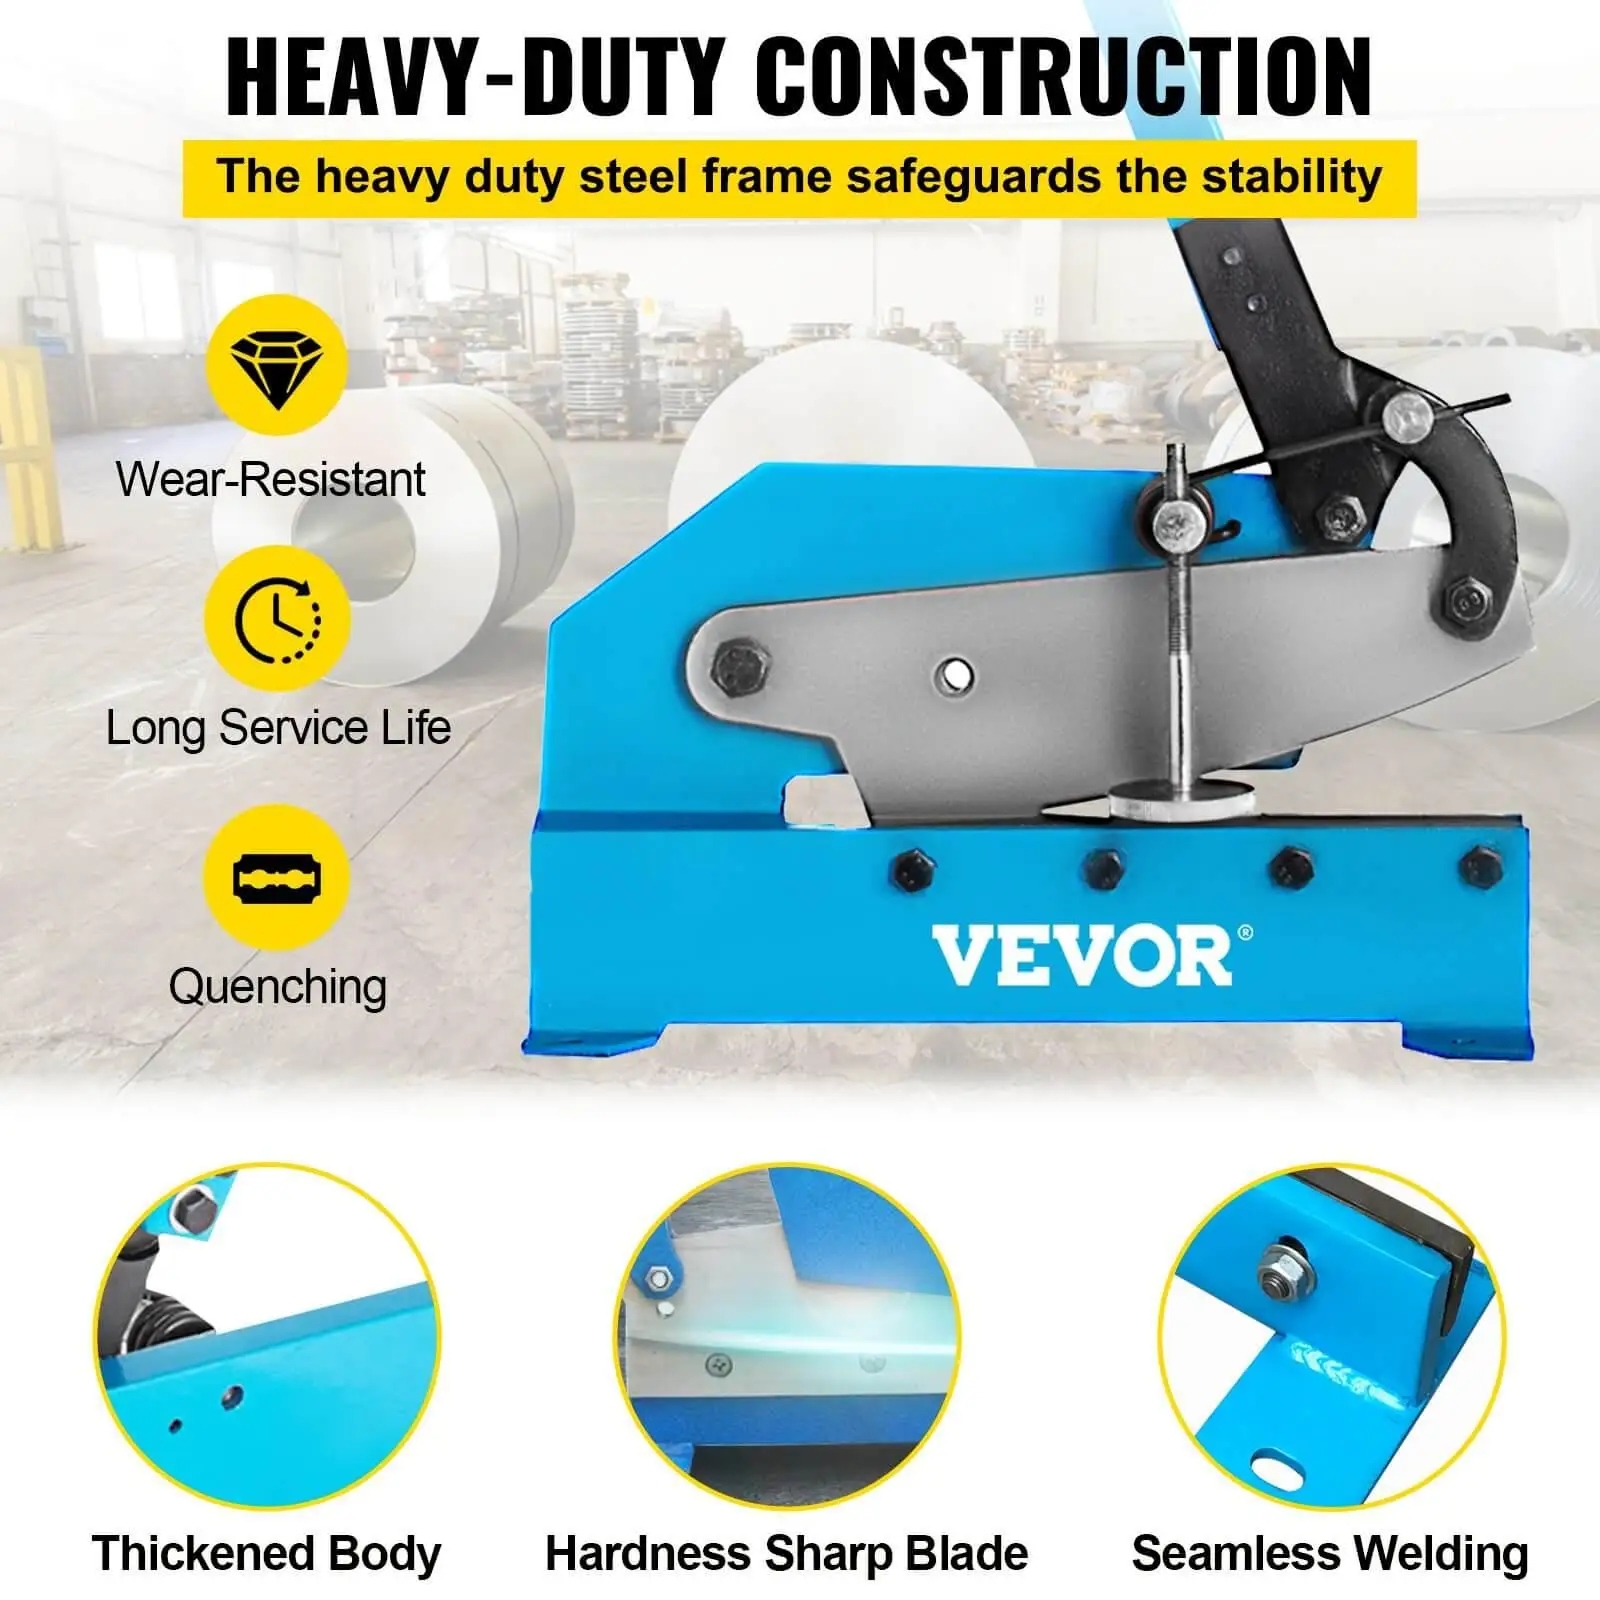 heavy duty construction on the VEVOR metal hand shear